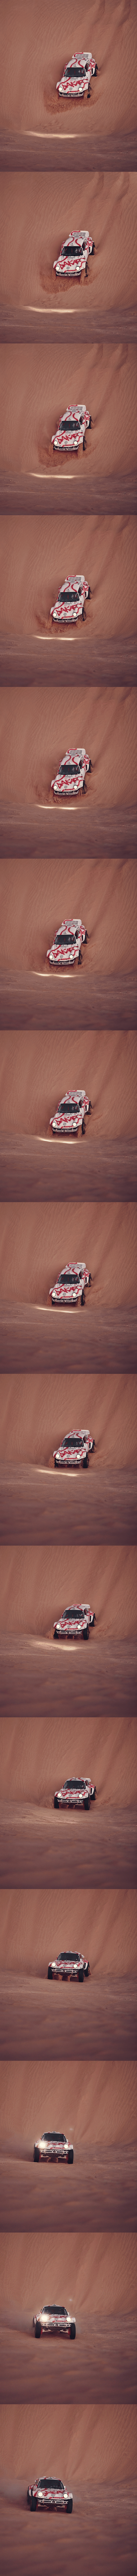 Road to Dakar #04 - Car&vintage